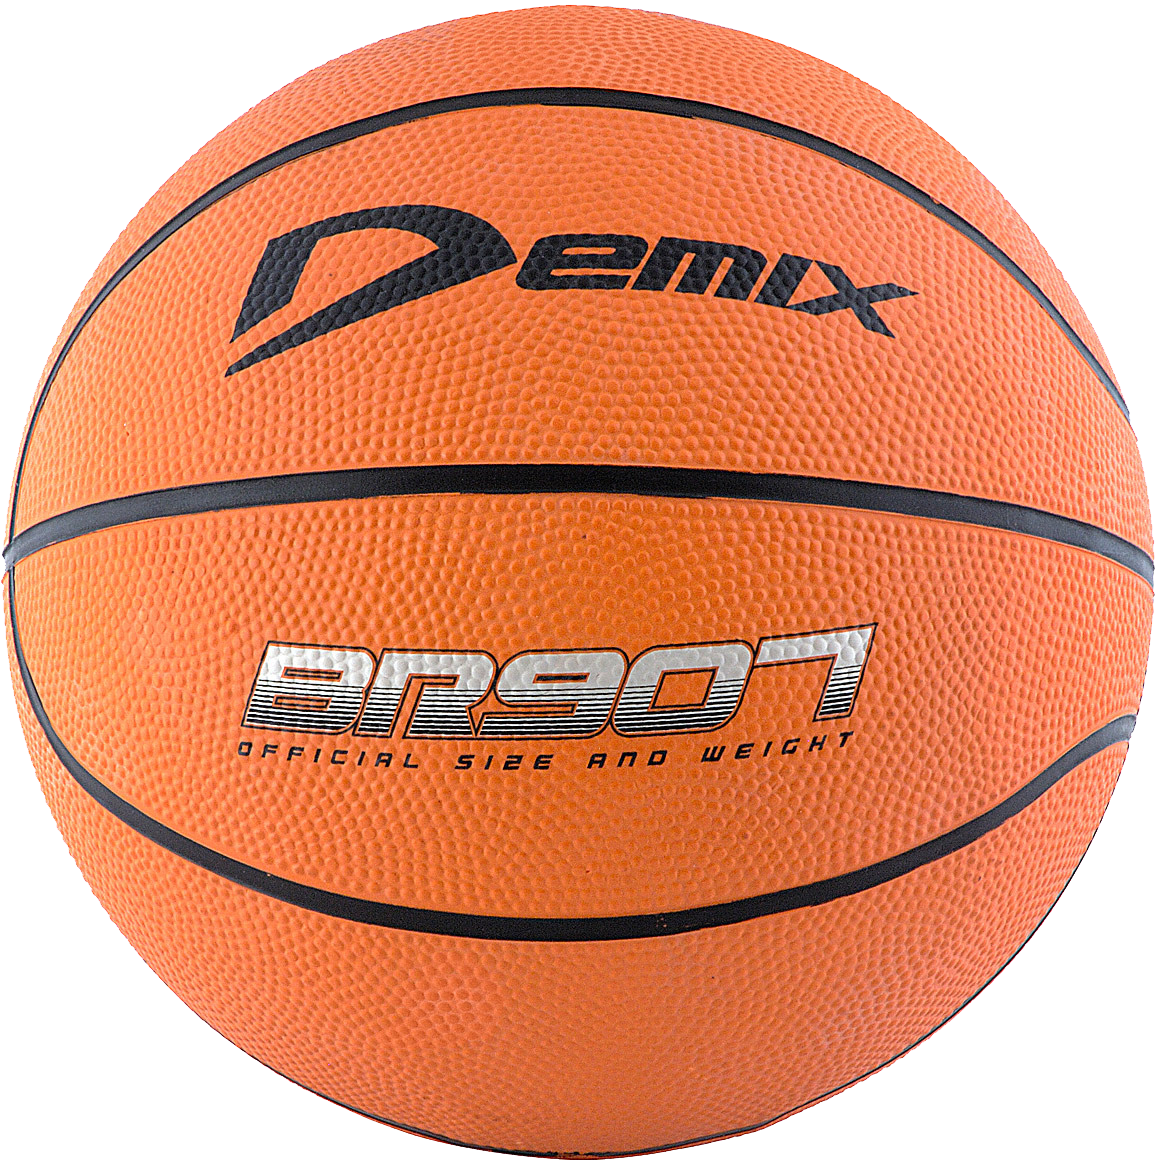 Basketball PNG HD - 121588